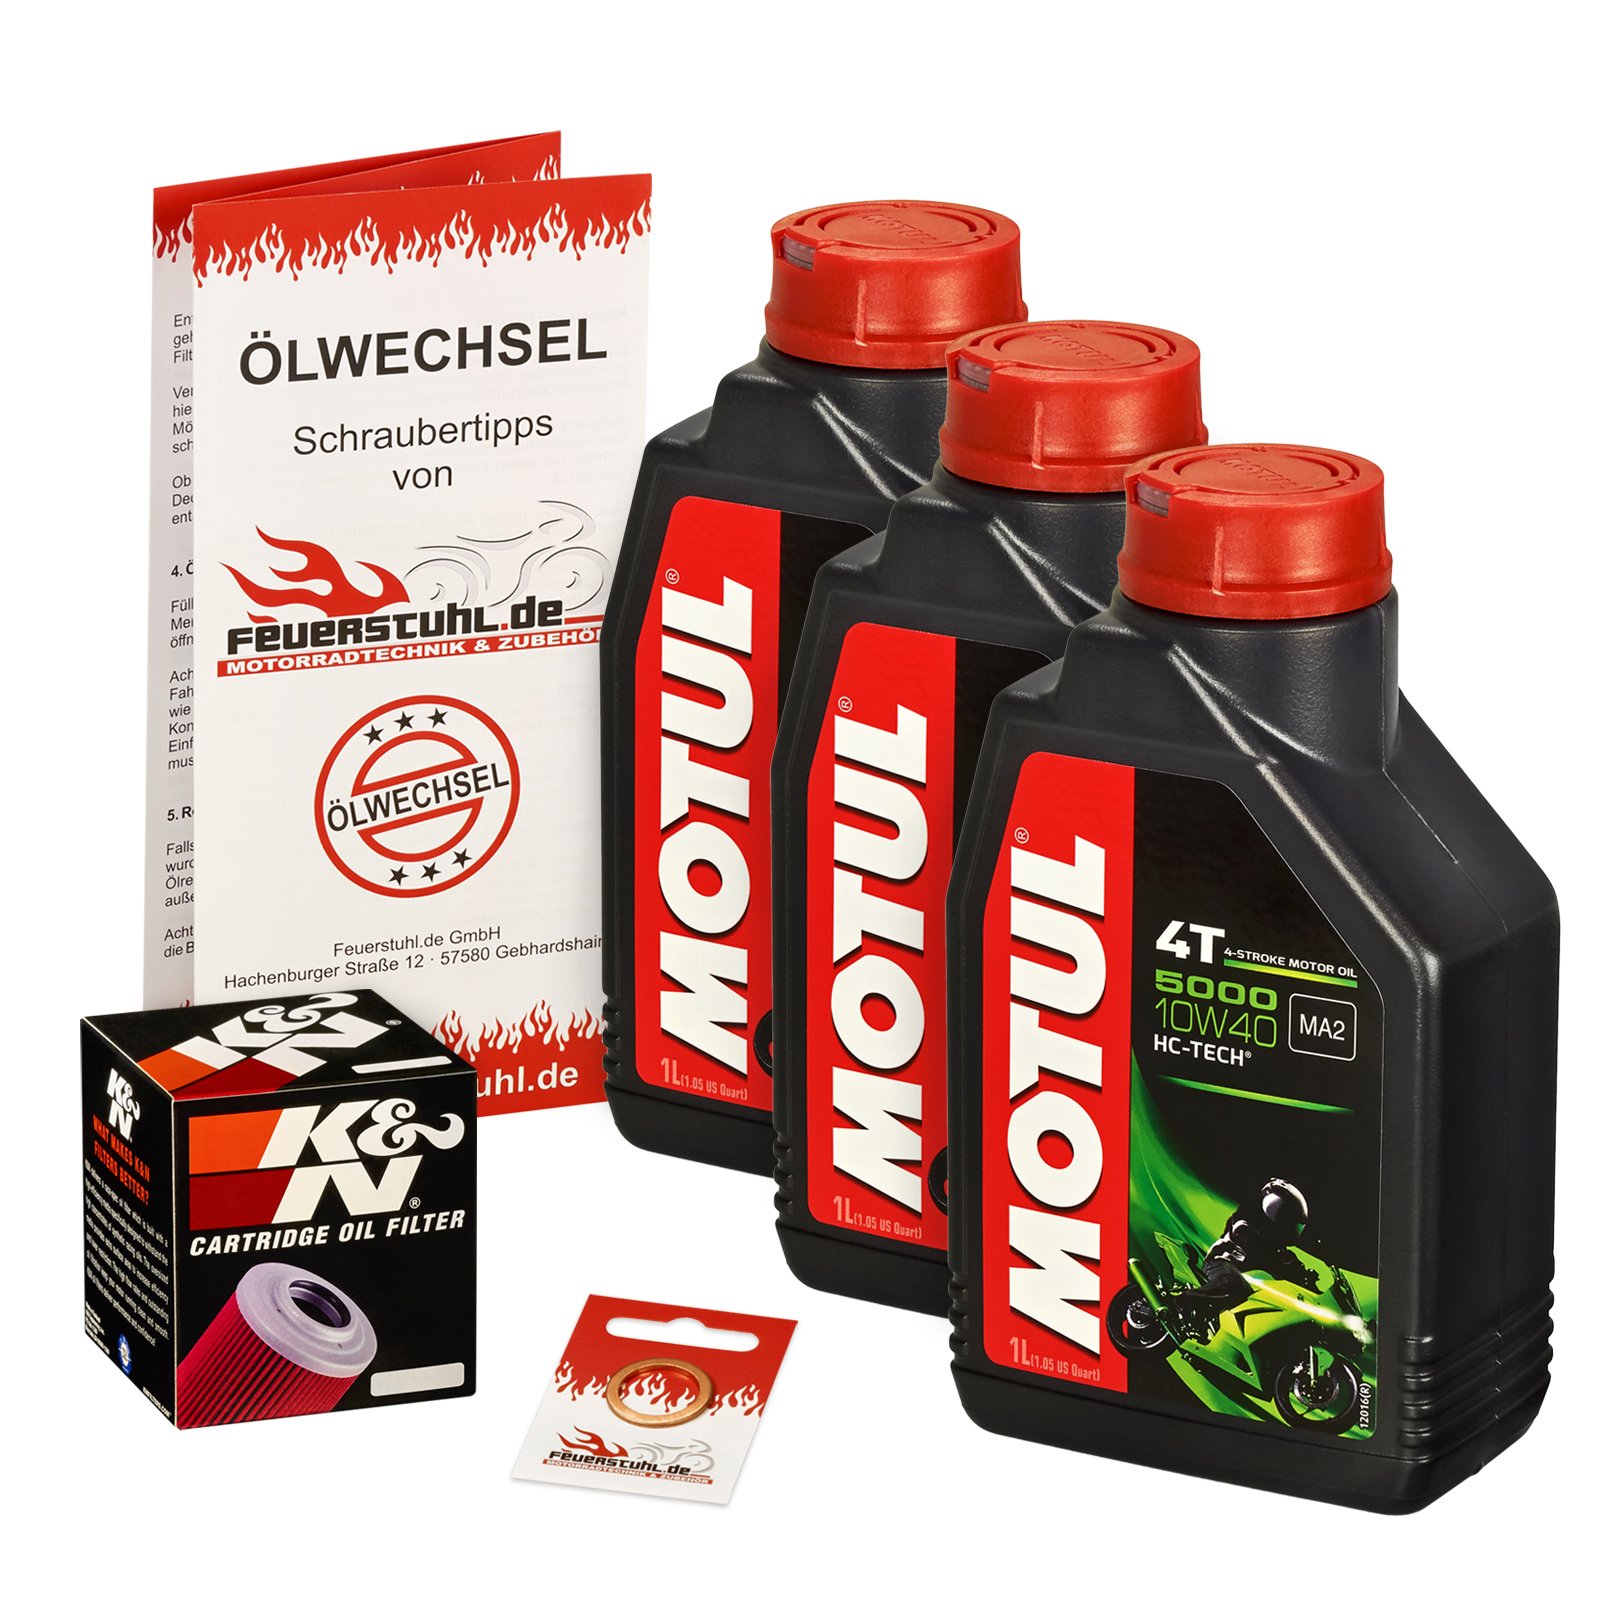 Motul 10W-40 Öl + K&N Ölfilter für Honda CBX 650 E, 83-84, RC13 - Ölwechselset inkl. Motoröl, Filter, Dichtring von Feuerstuhl.de GmbH